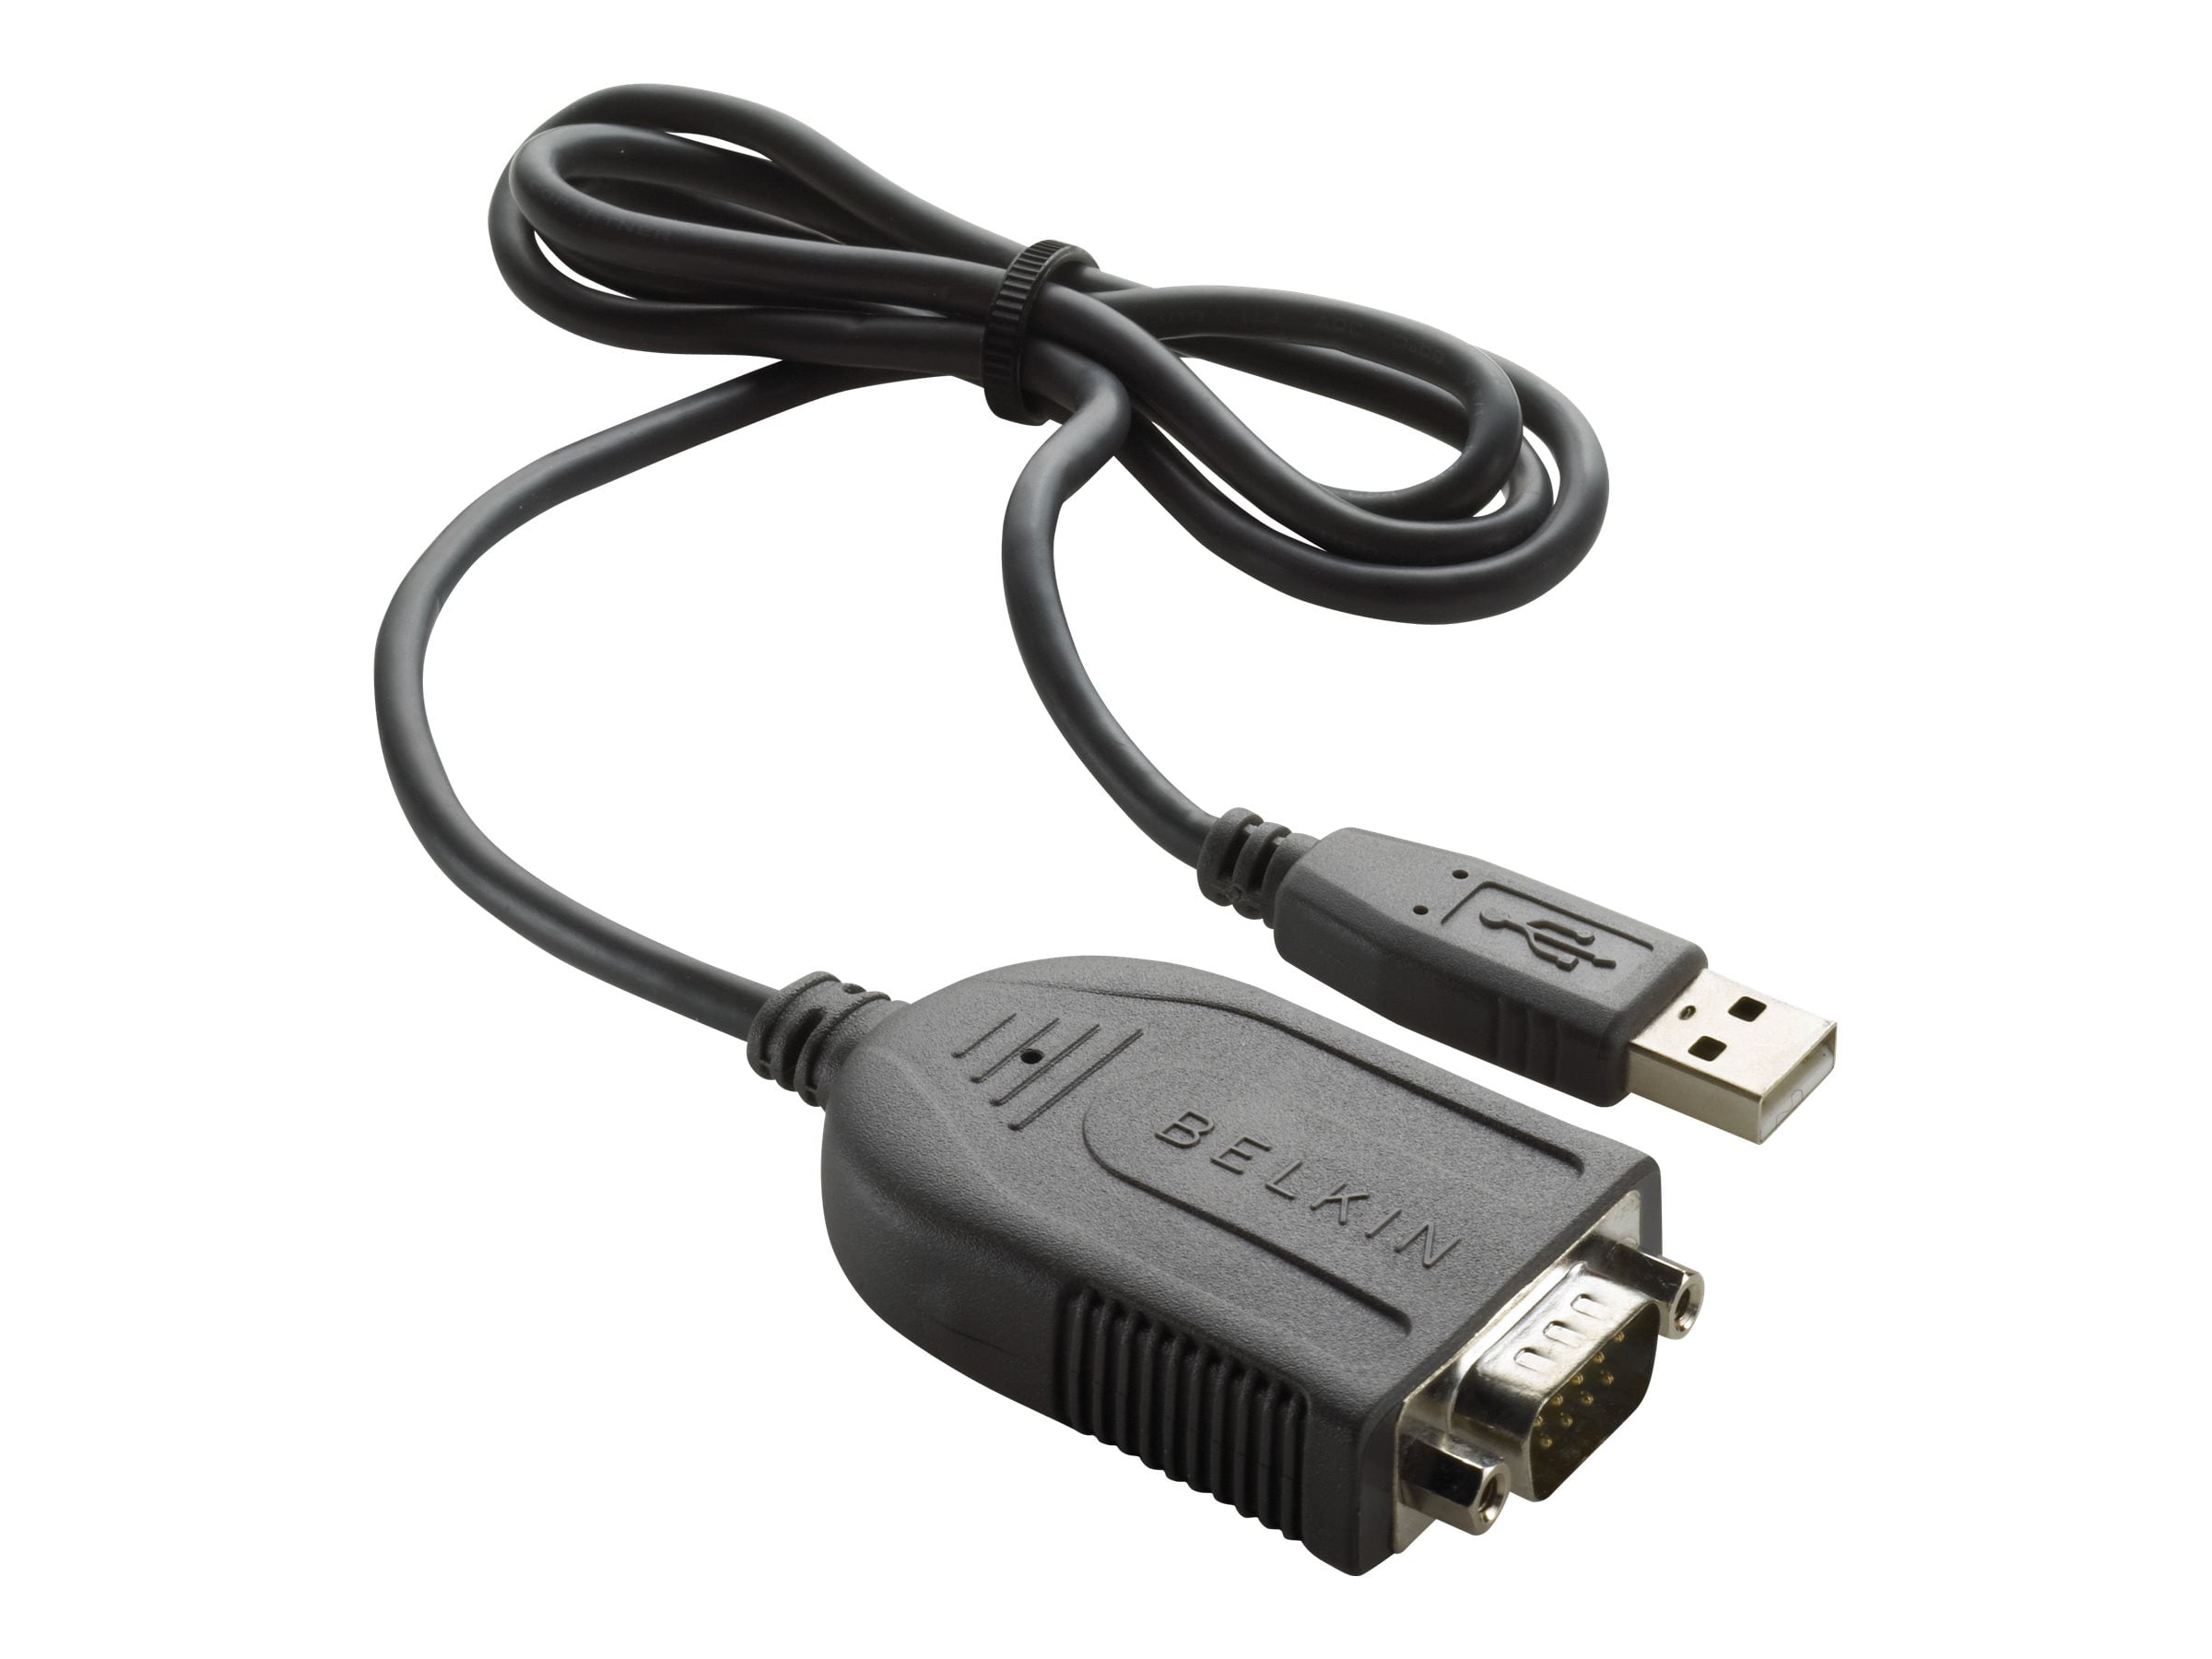 BELKIN F5U257 SERIAL ADAPTER USB TO SERIAL CONVERETER 